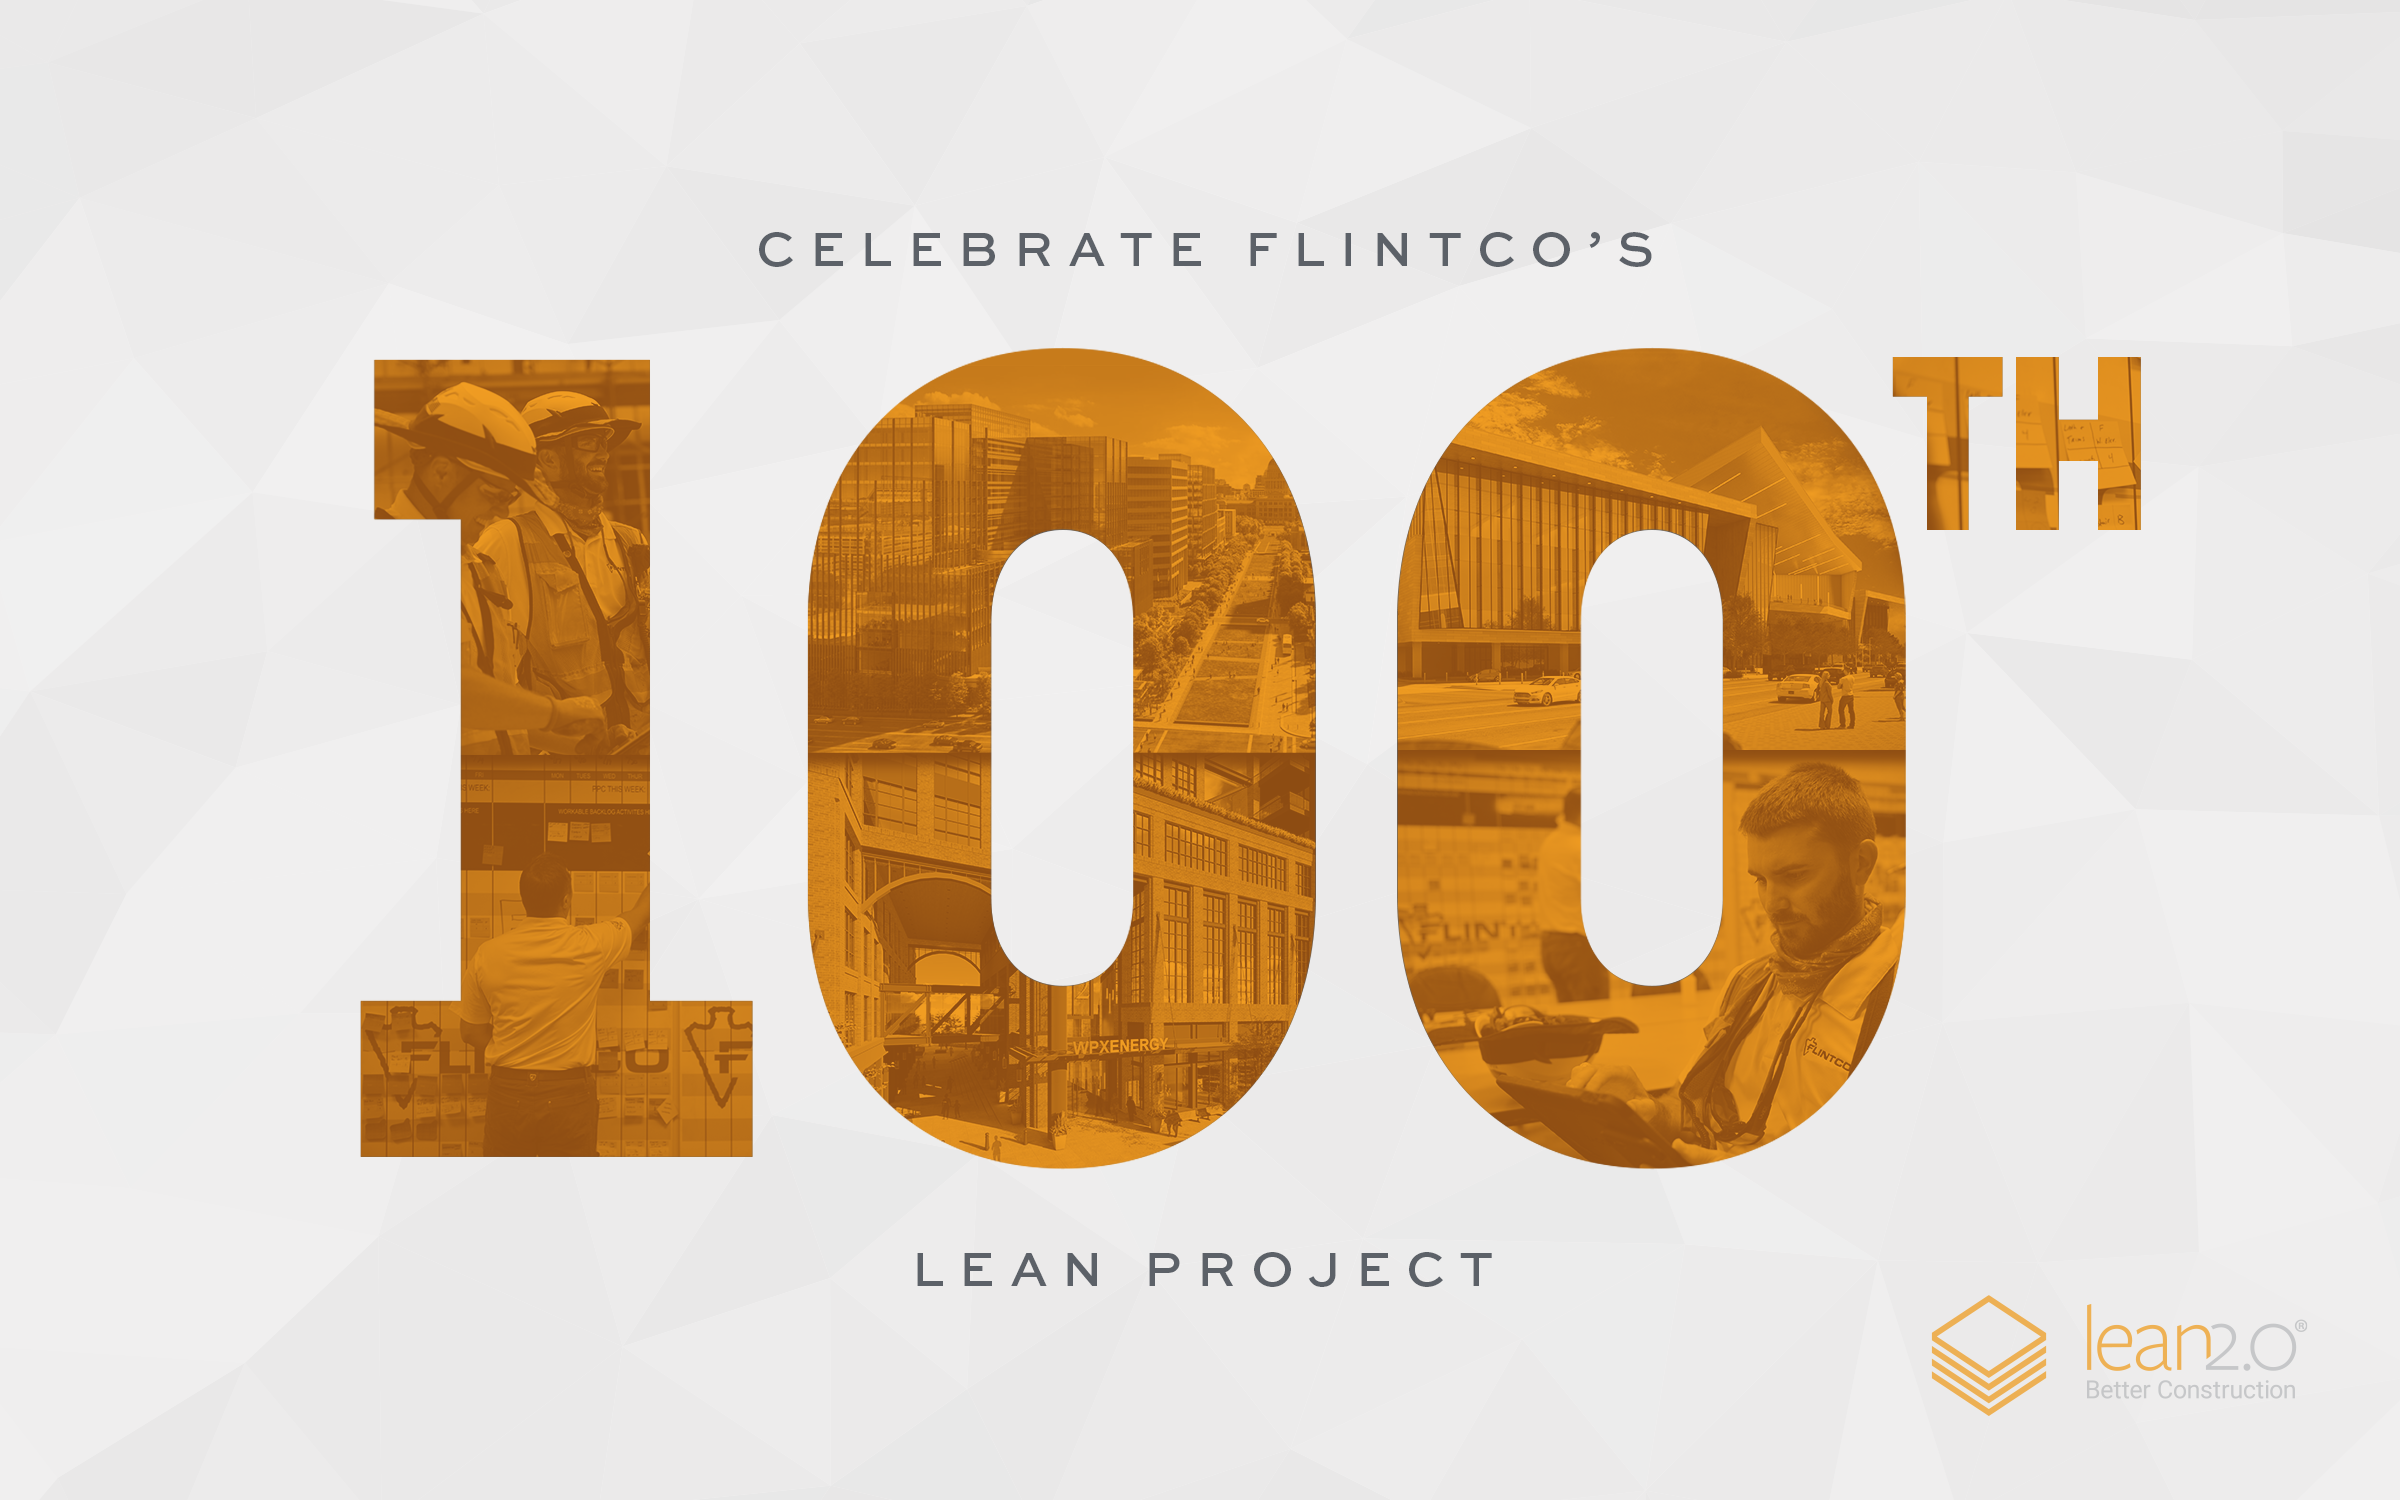 Flintco Celebrates 100th Lean2.0® Project